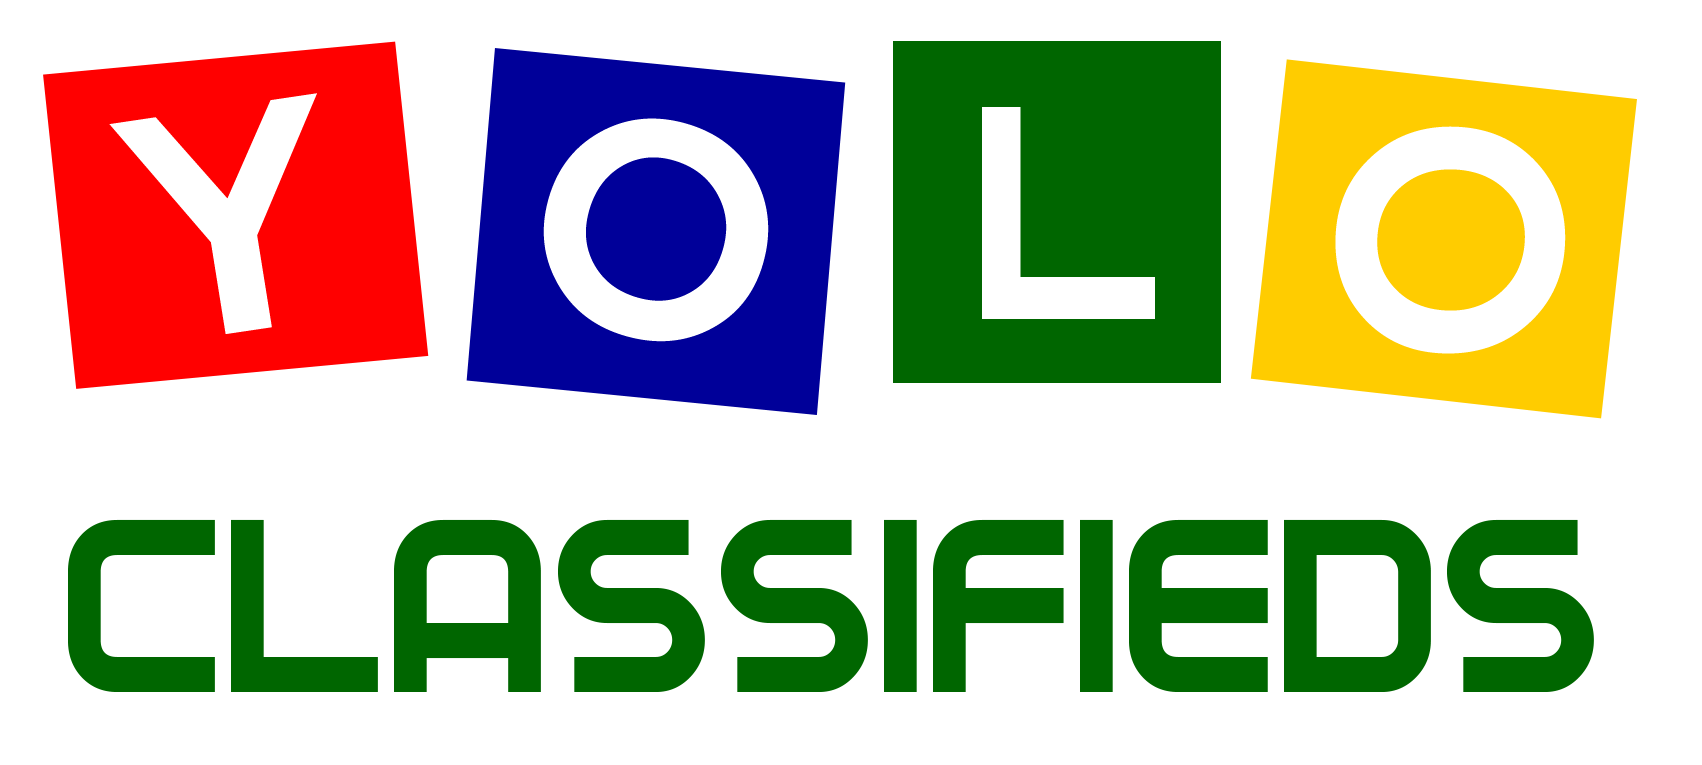 Classified Logo - Classified